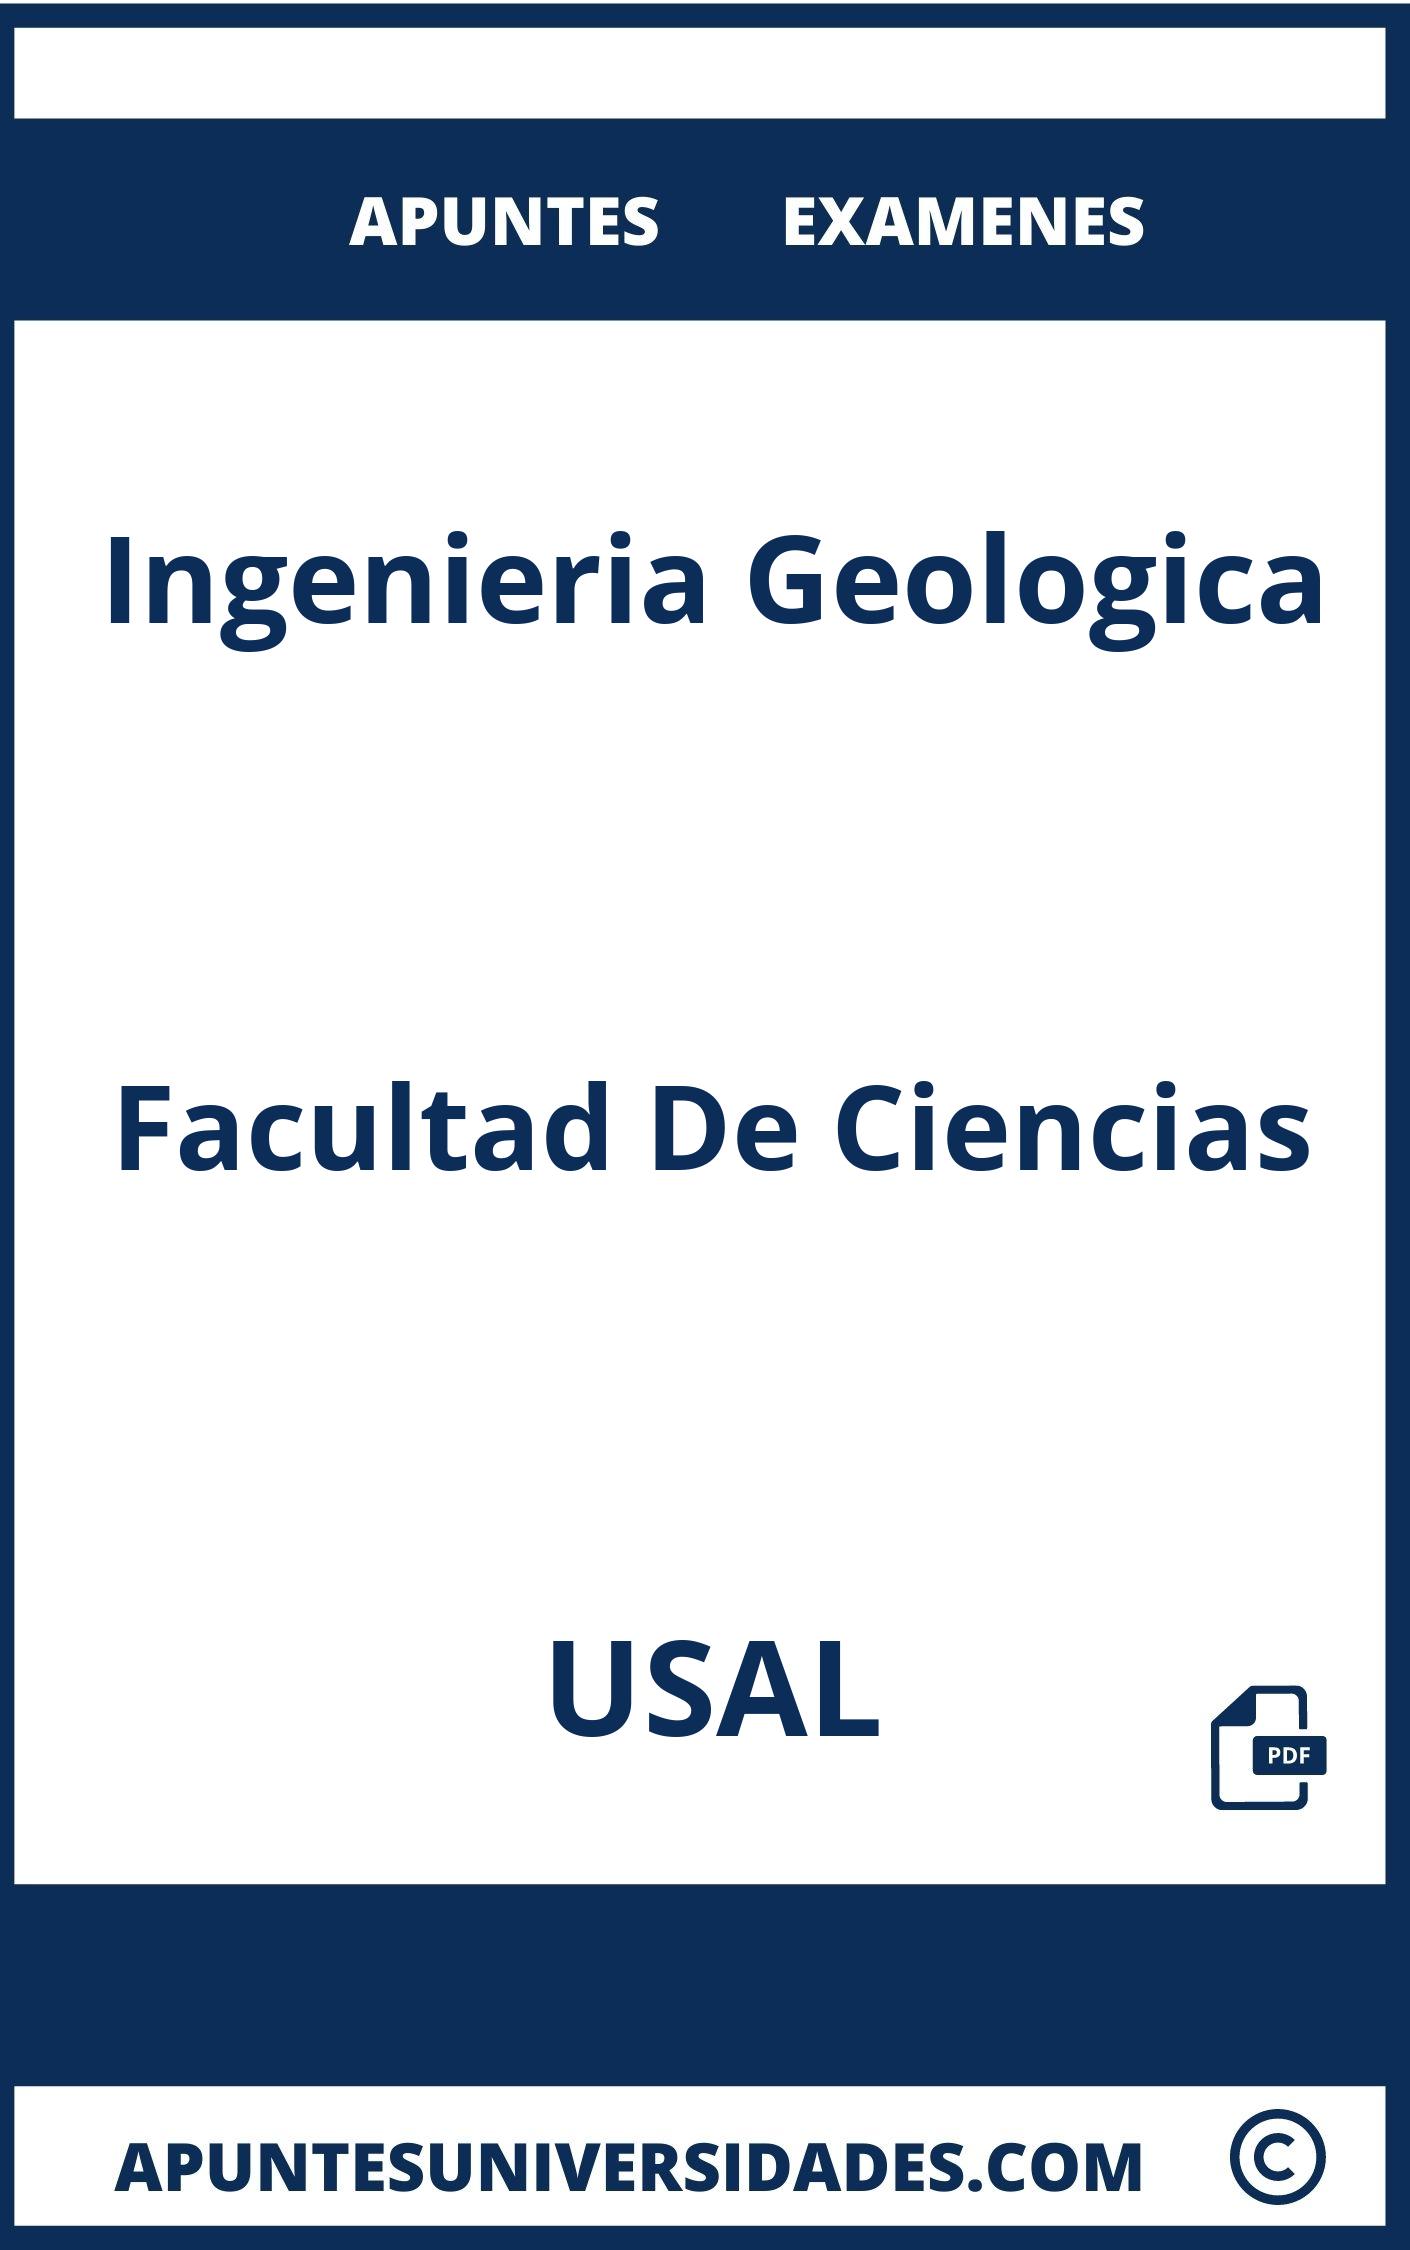 Ingenieria Geologica USAL Examenes Apuntes